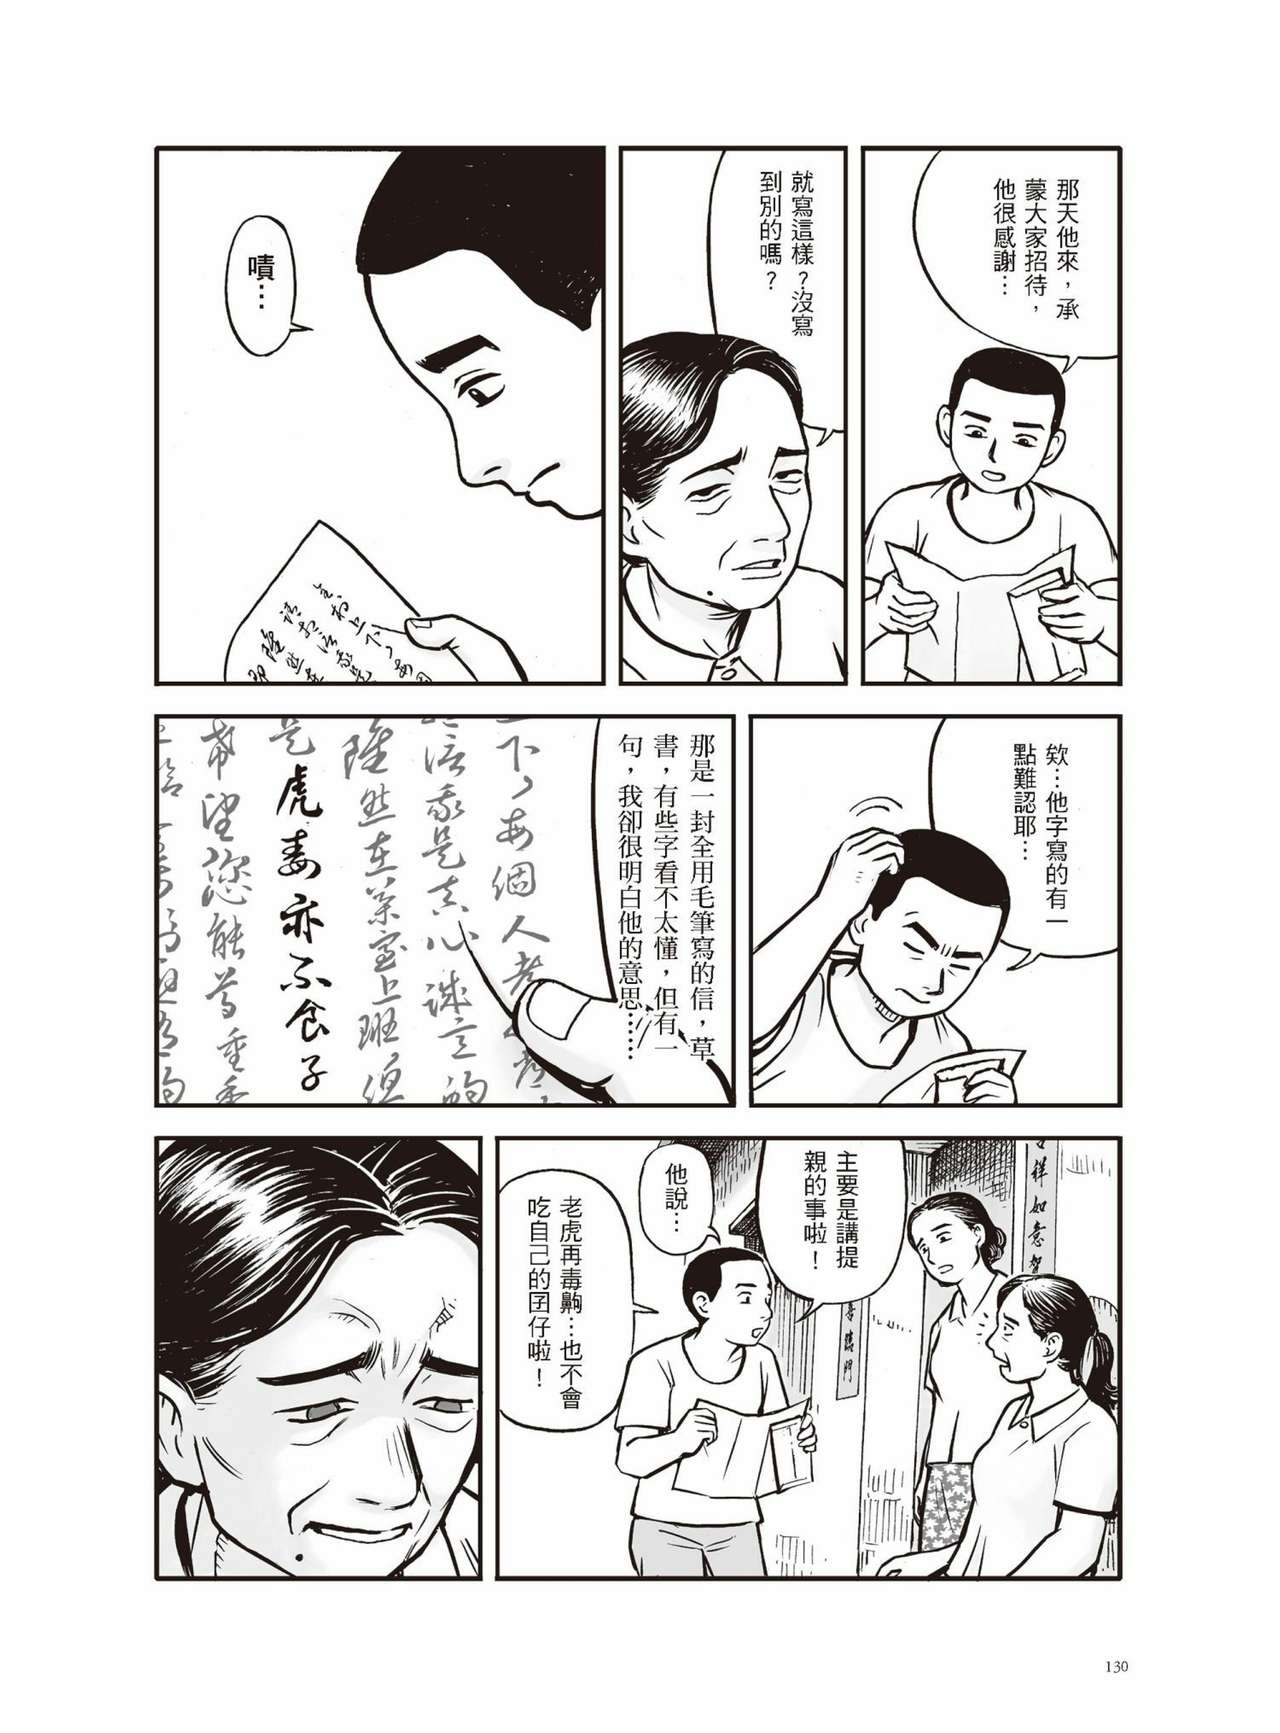 [LI,HUNG-CHIN] Tousan - A Borrowed Life|多桑 [Chinese] 129